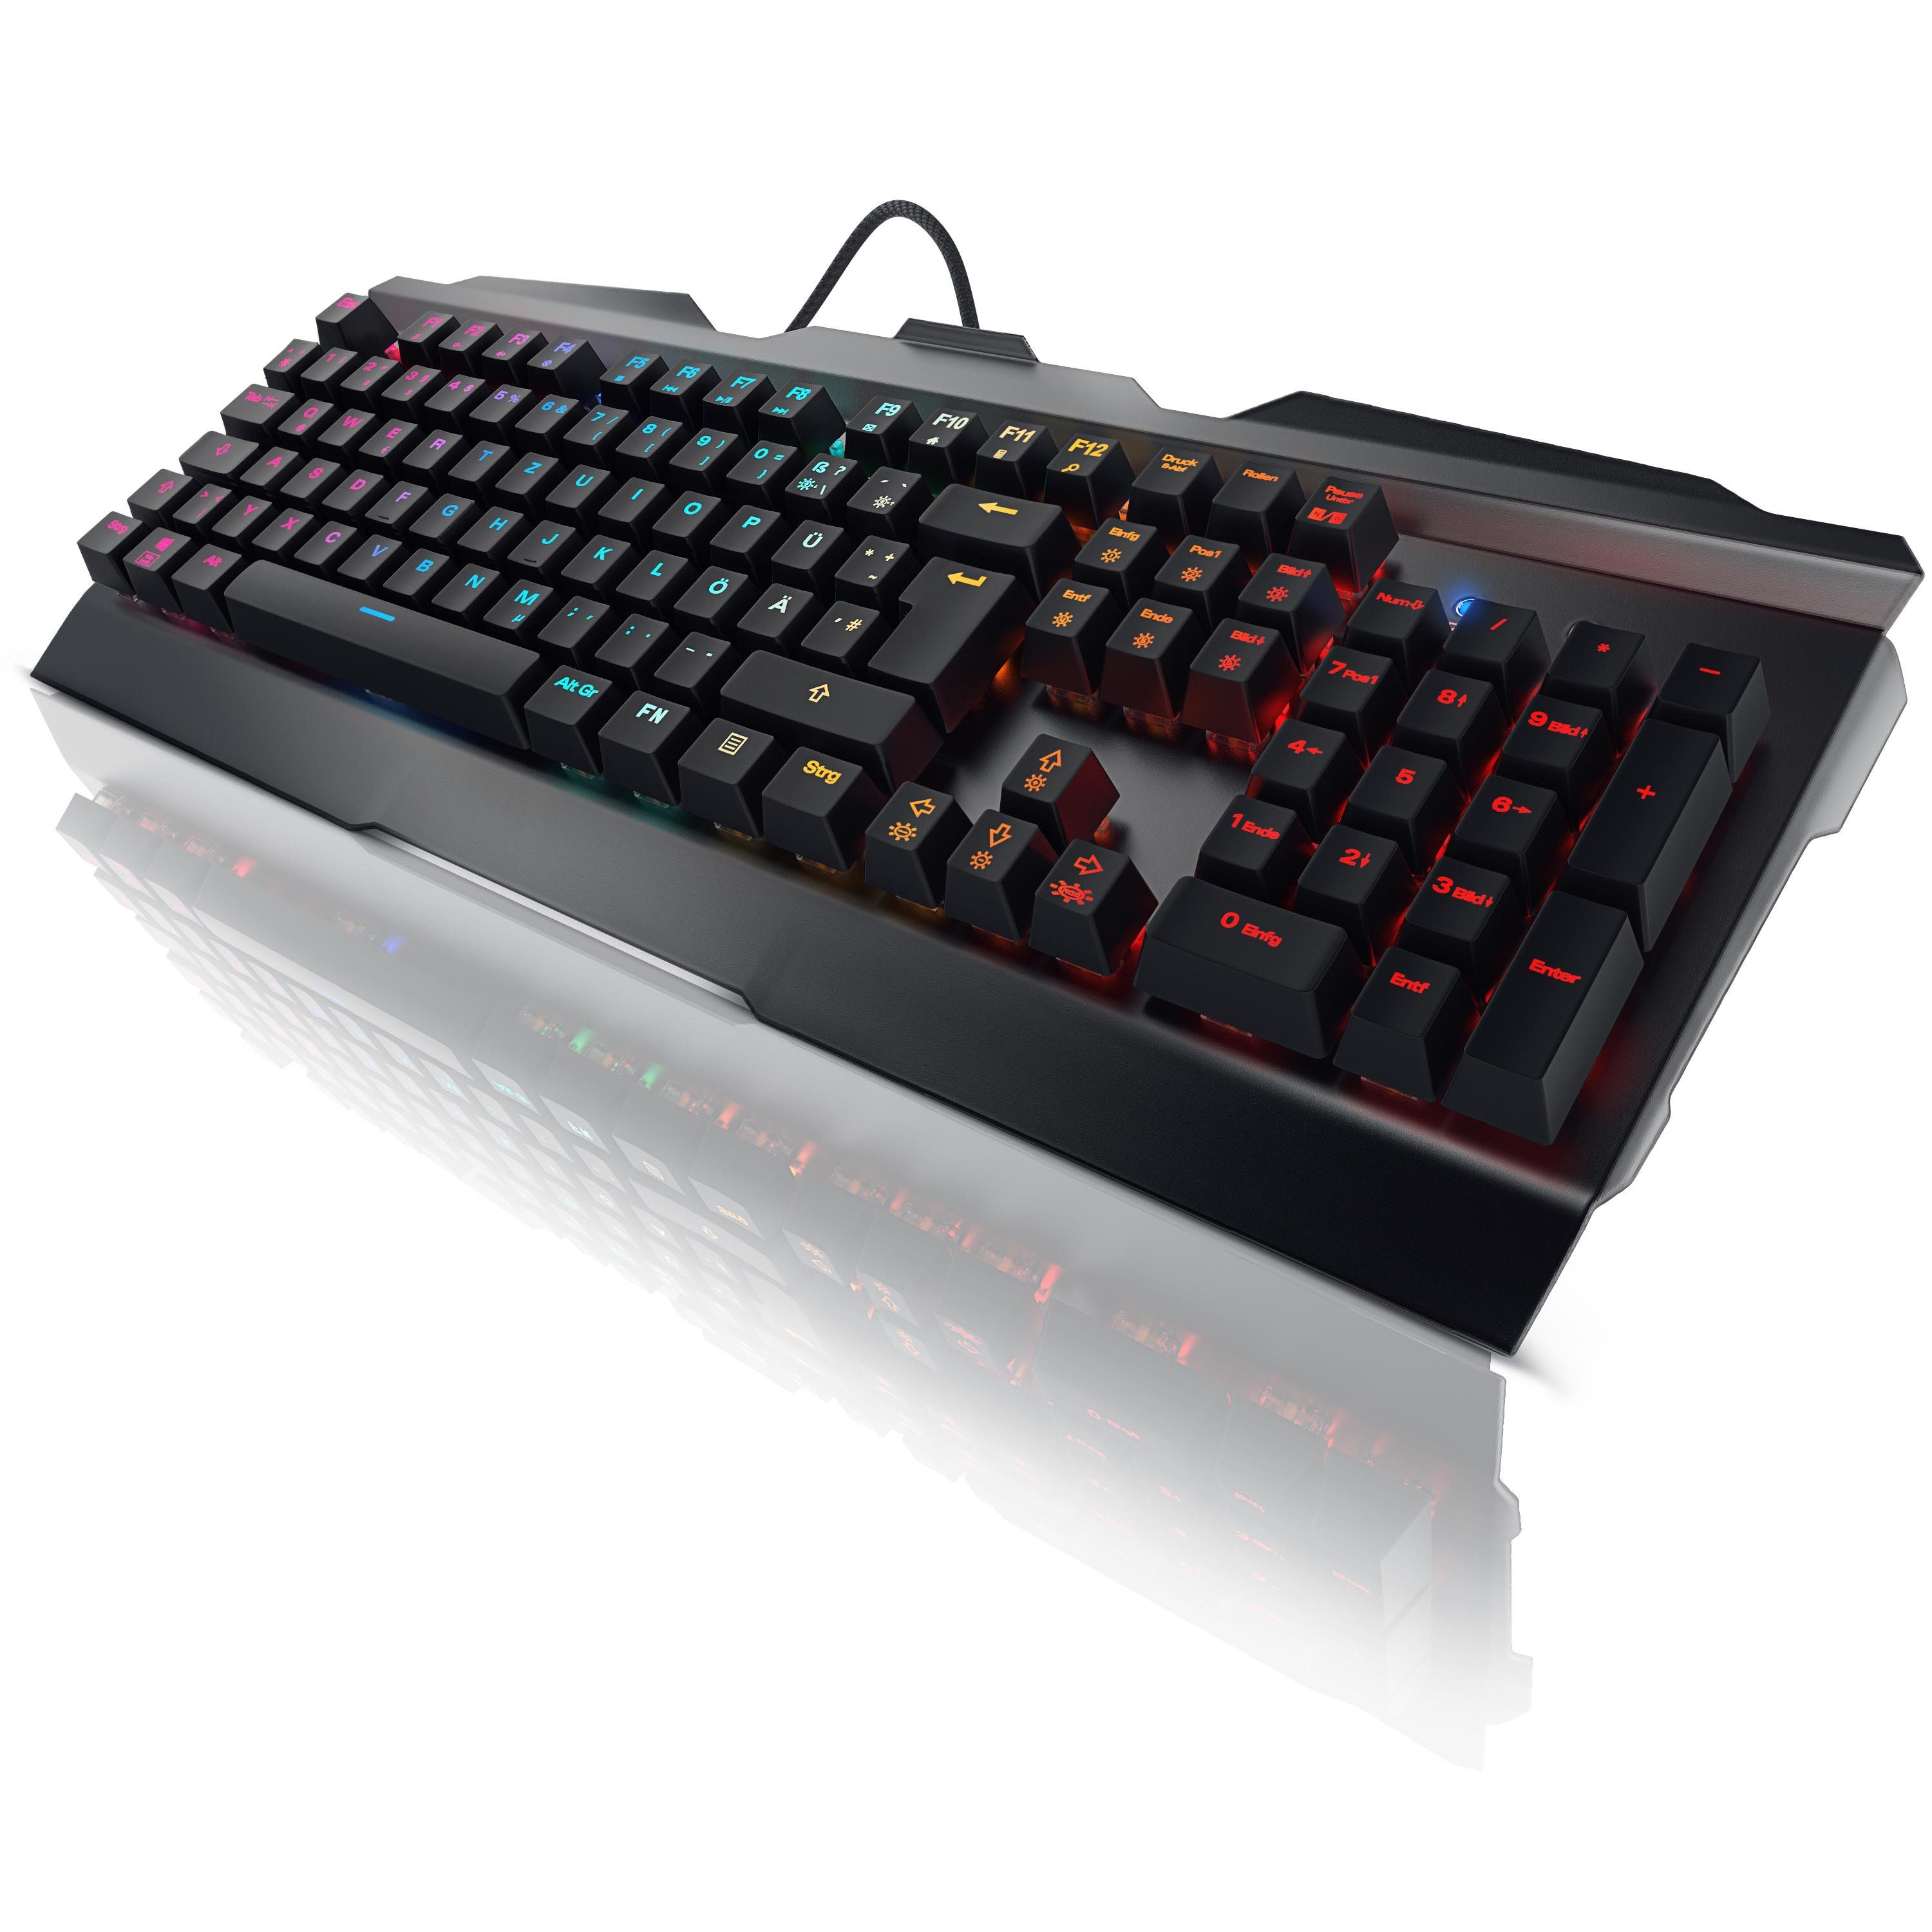 Titanwolf Gaming-Tastatur (mechanisch, Aluminium LED Beleuchtung RGB Gehäuse, Invader) 